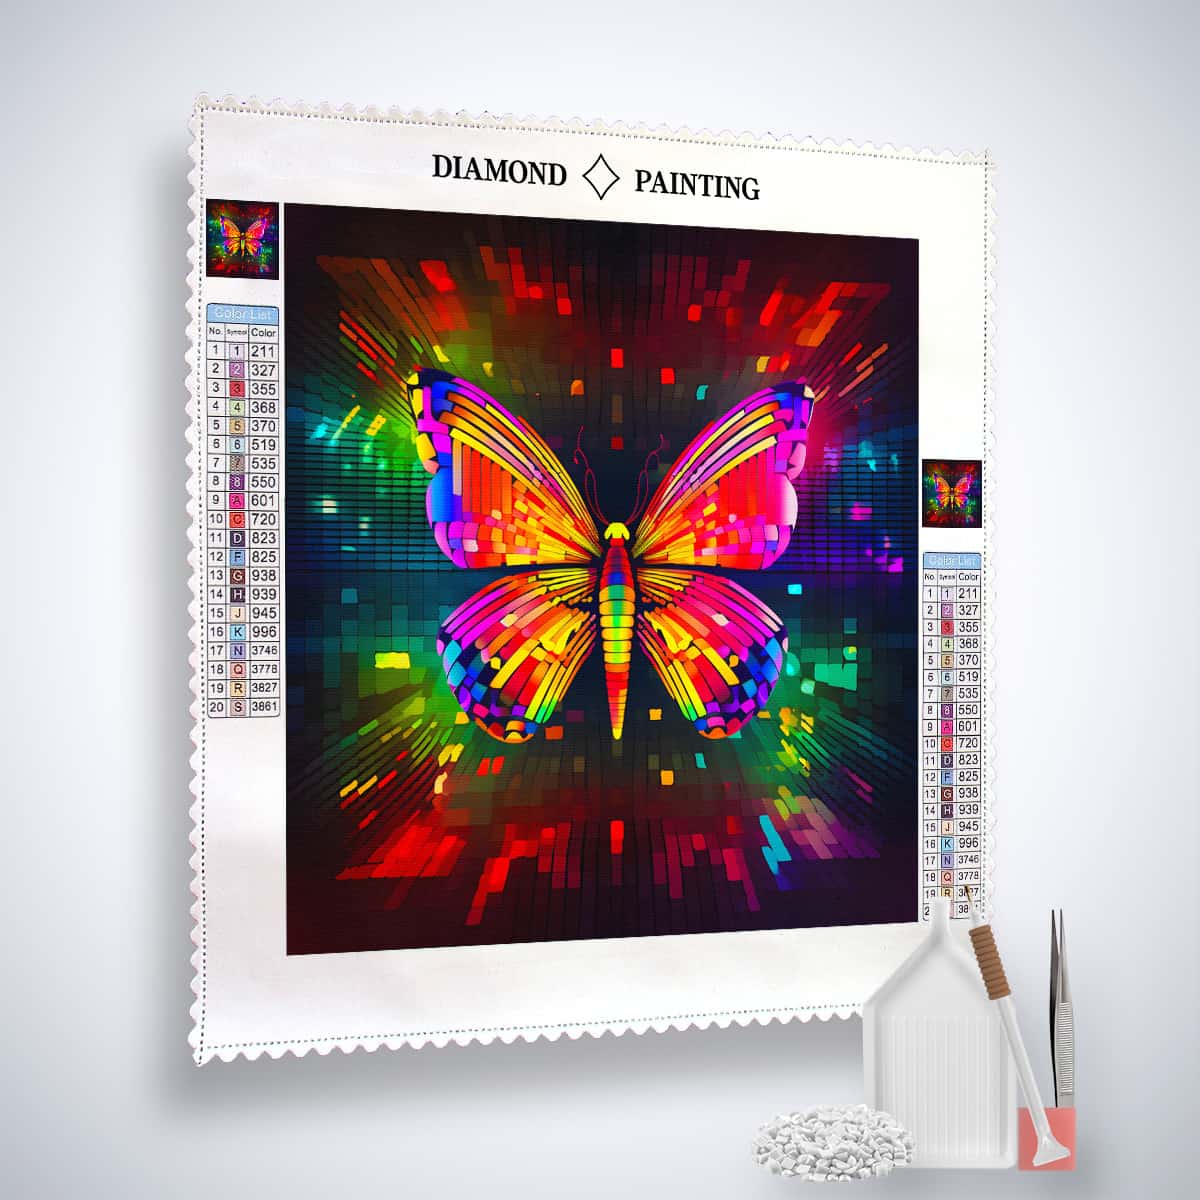 AB Diamond Painting - Schmetterling Bunt Frontal - gedruckt in Ultra-HD - AB Diamond, Neu eingetroffen, Quadratisch, Schmetterling, Tiere